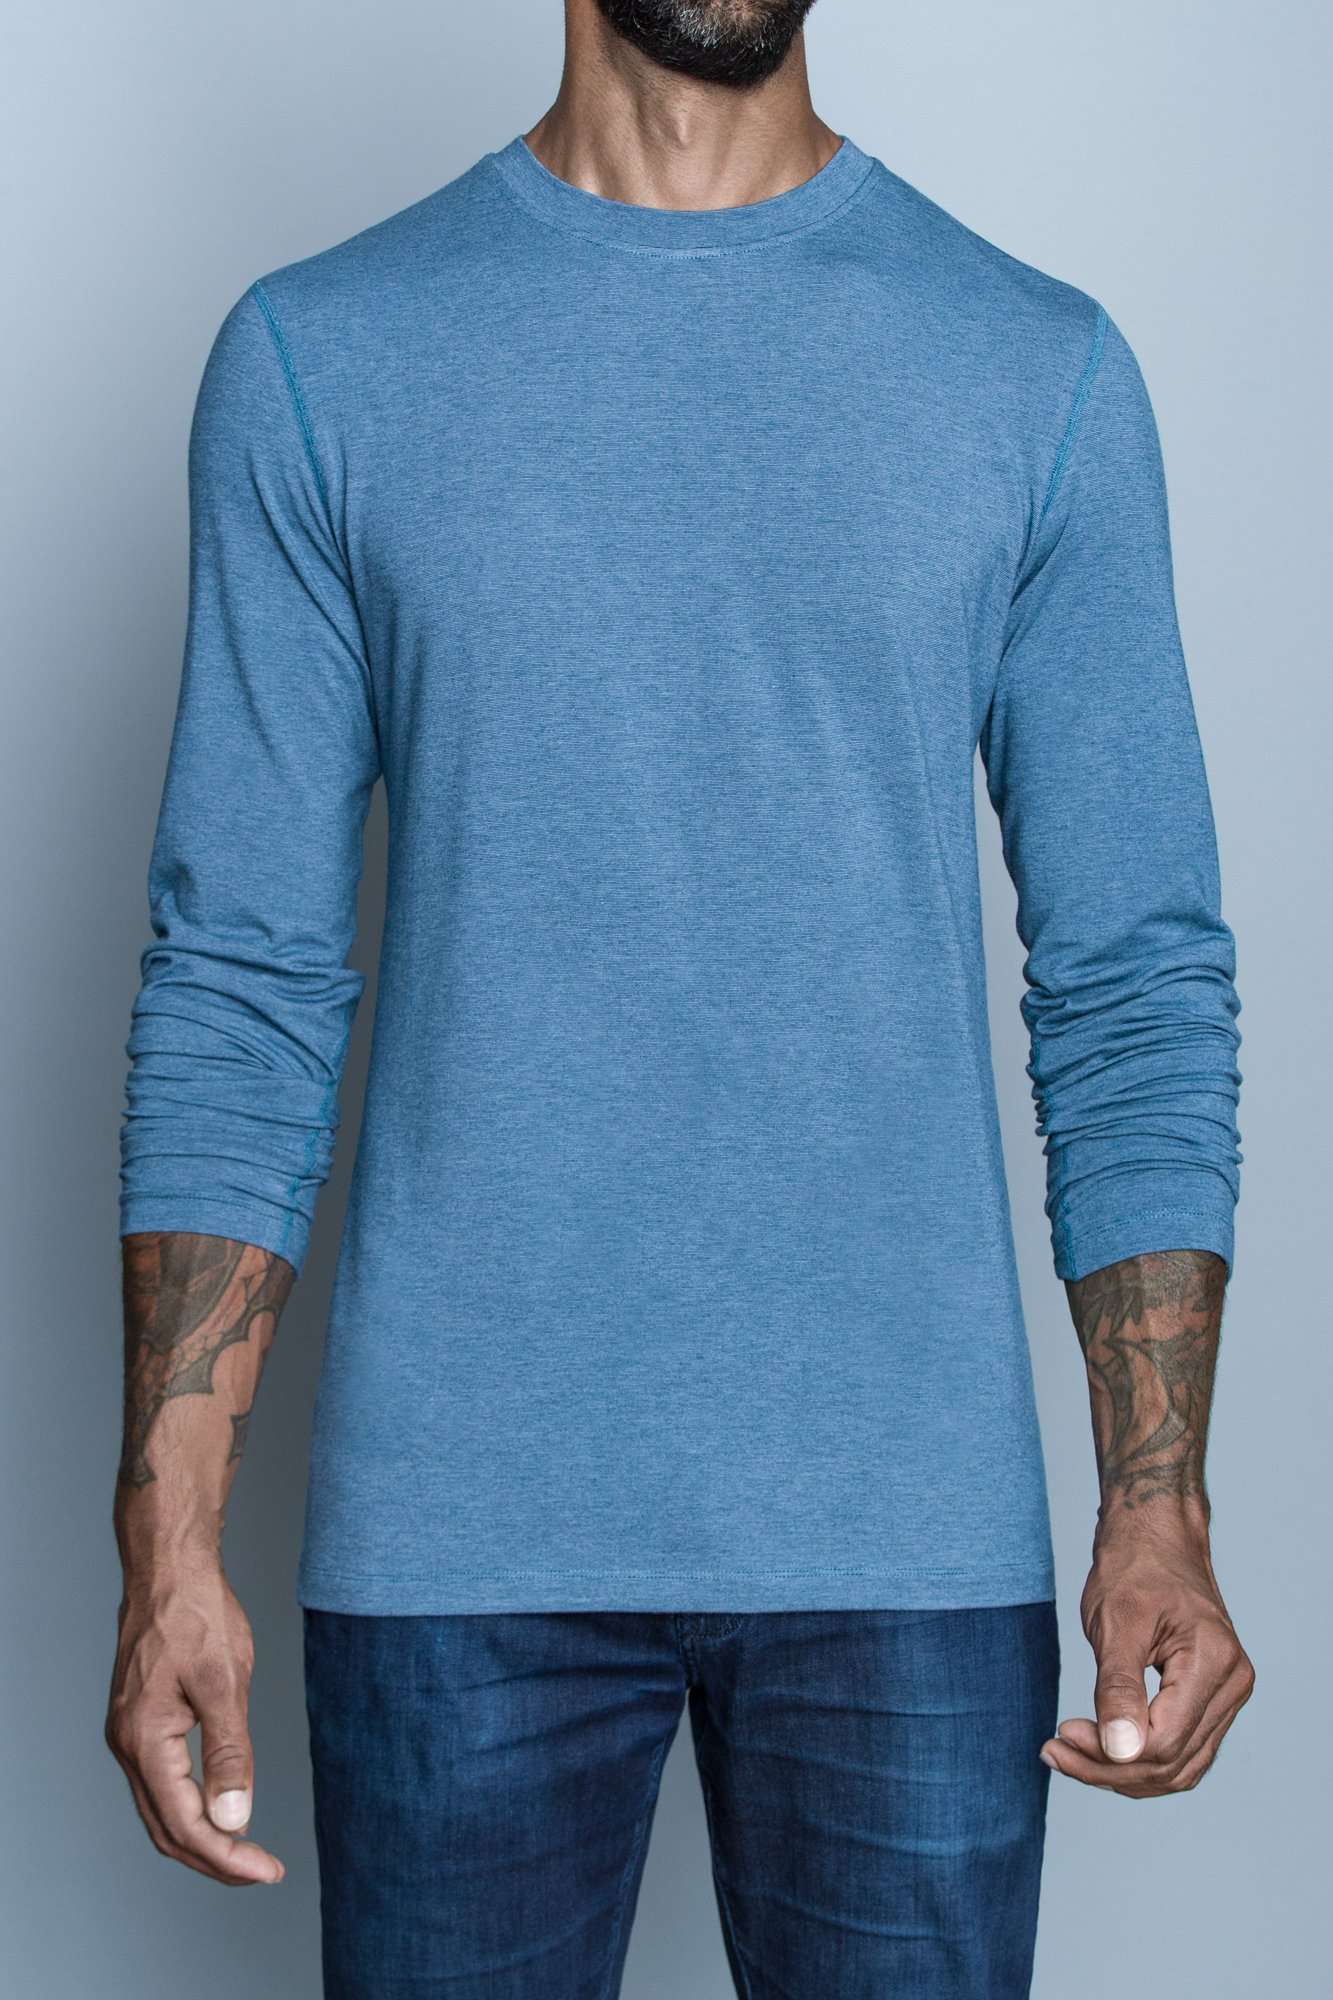 The Navas Lab Mac Microstripe long-sleeve shirt for tall guys in blue. The perfect tall slim shirt for tall and slim guys looking for style and comfort.